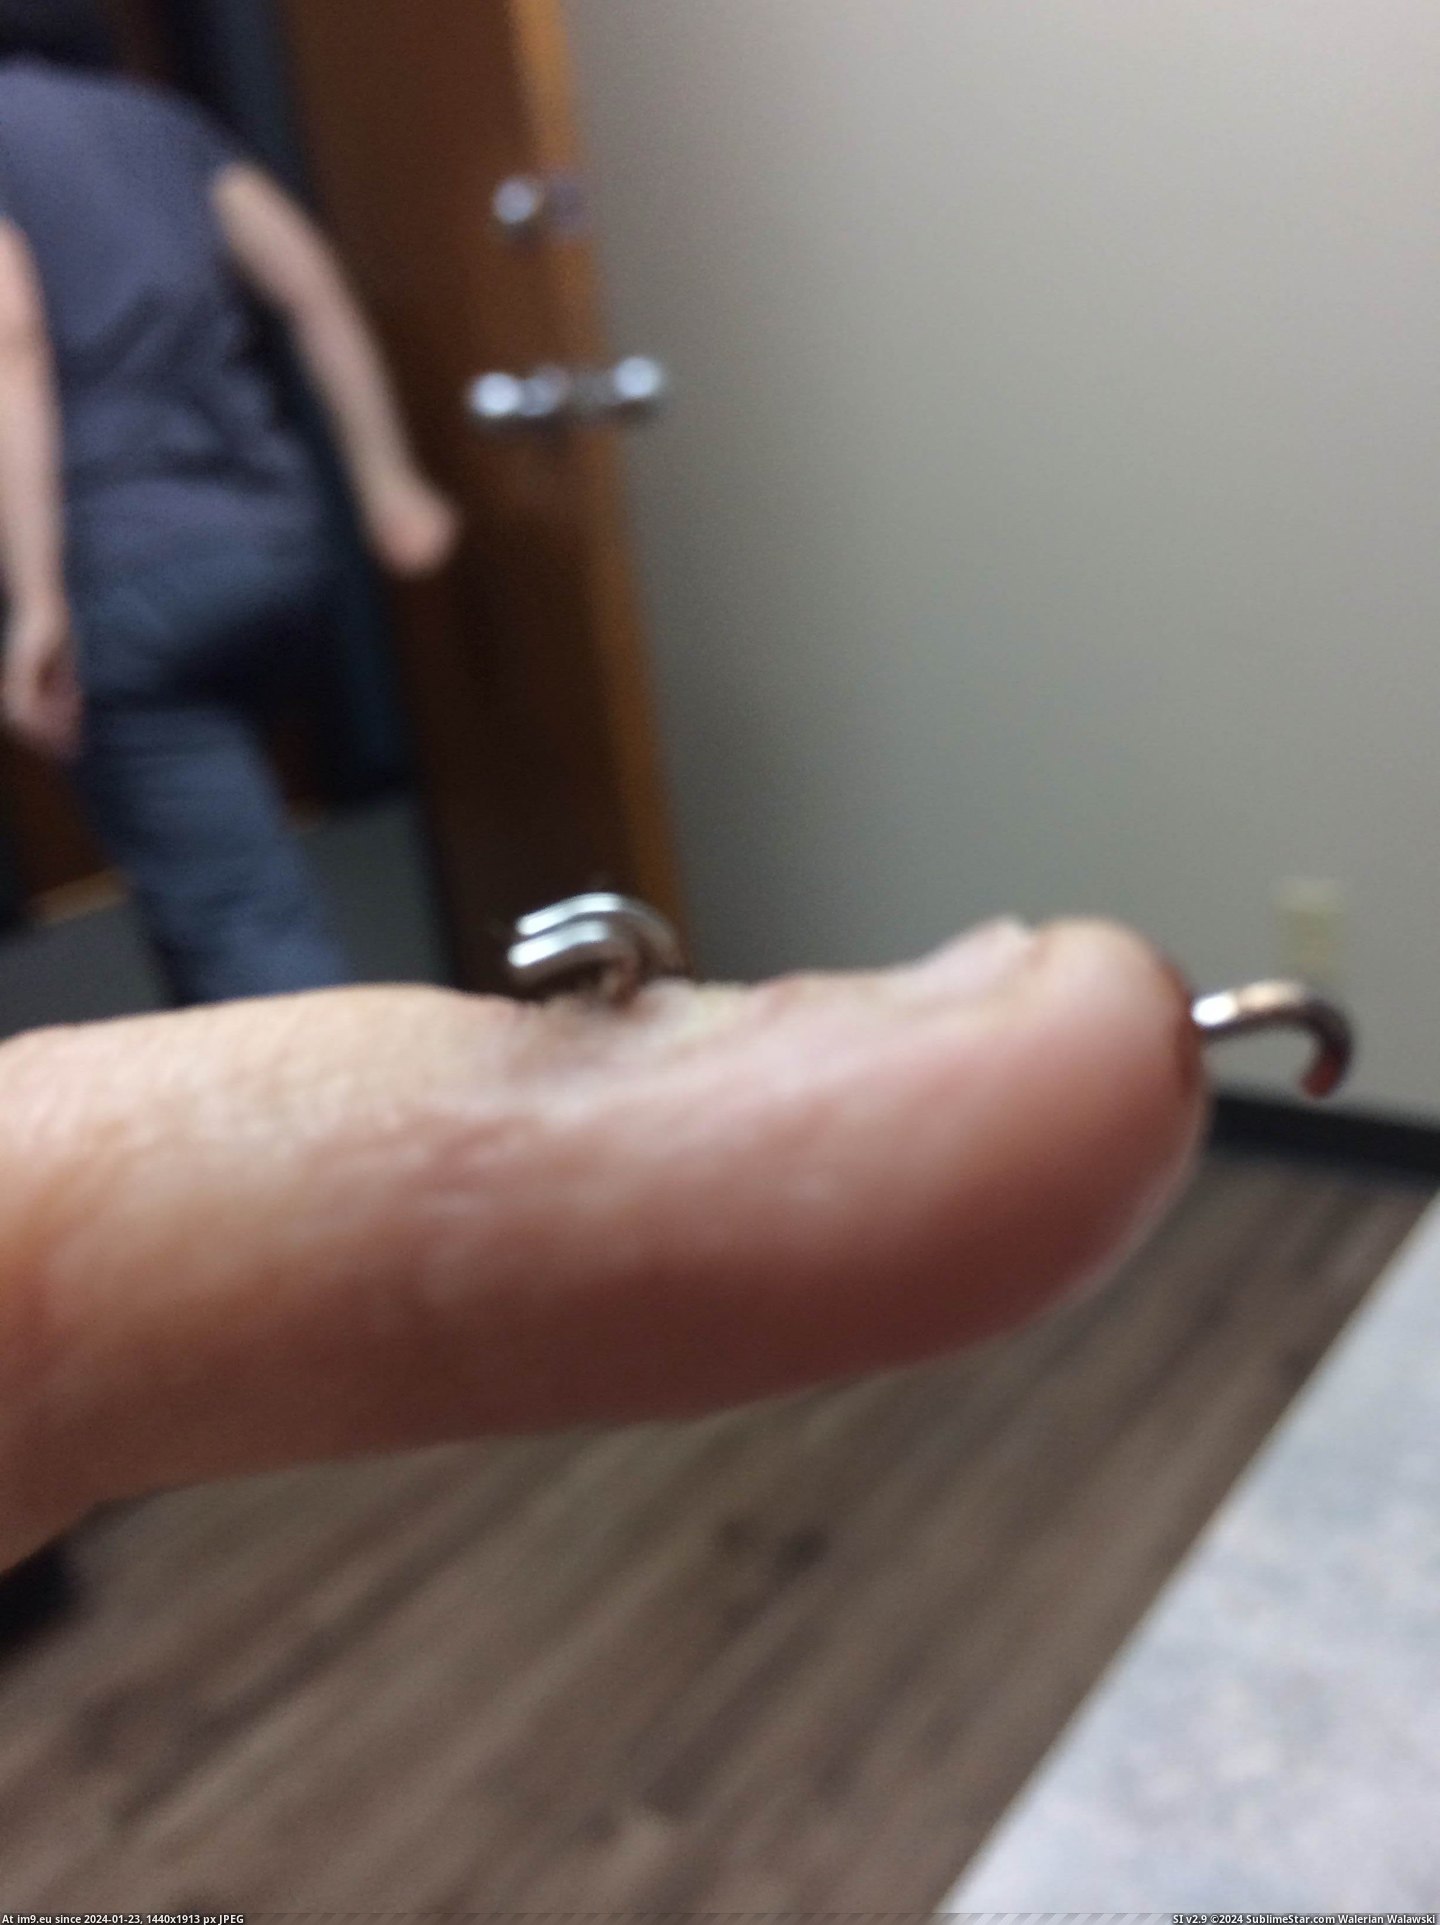 #Wtf #Wife #Pinky #Finger #Broken [Wtf] My Wife's Broken Pinky Finger 1 Pic. (Obraz z album My r/WTF favs))